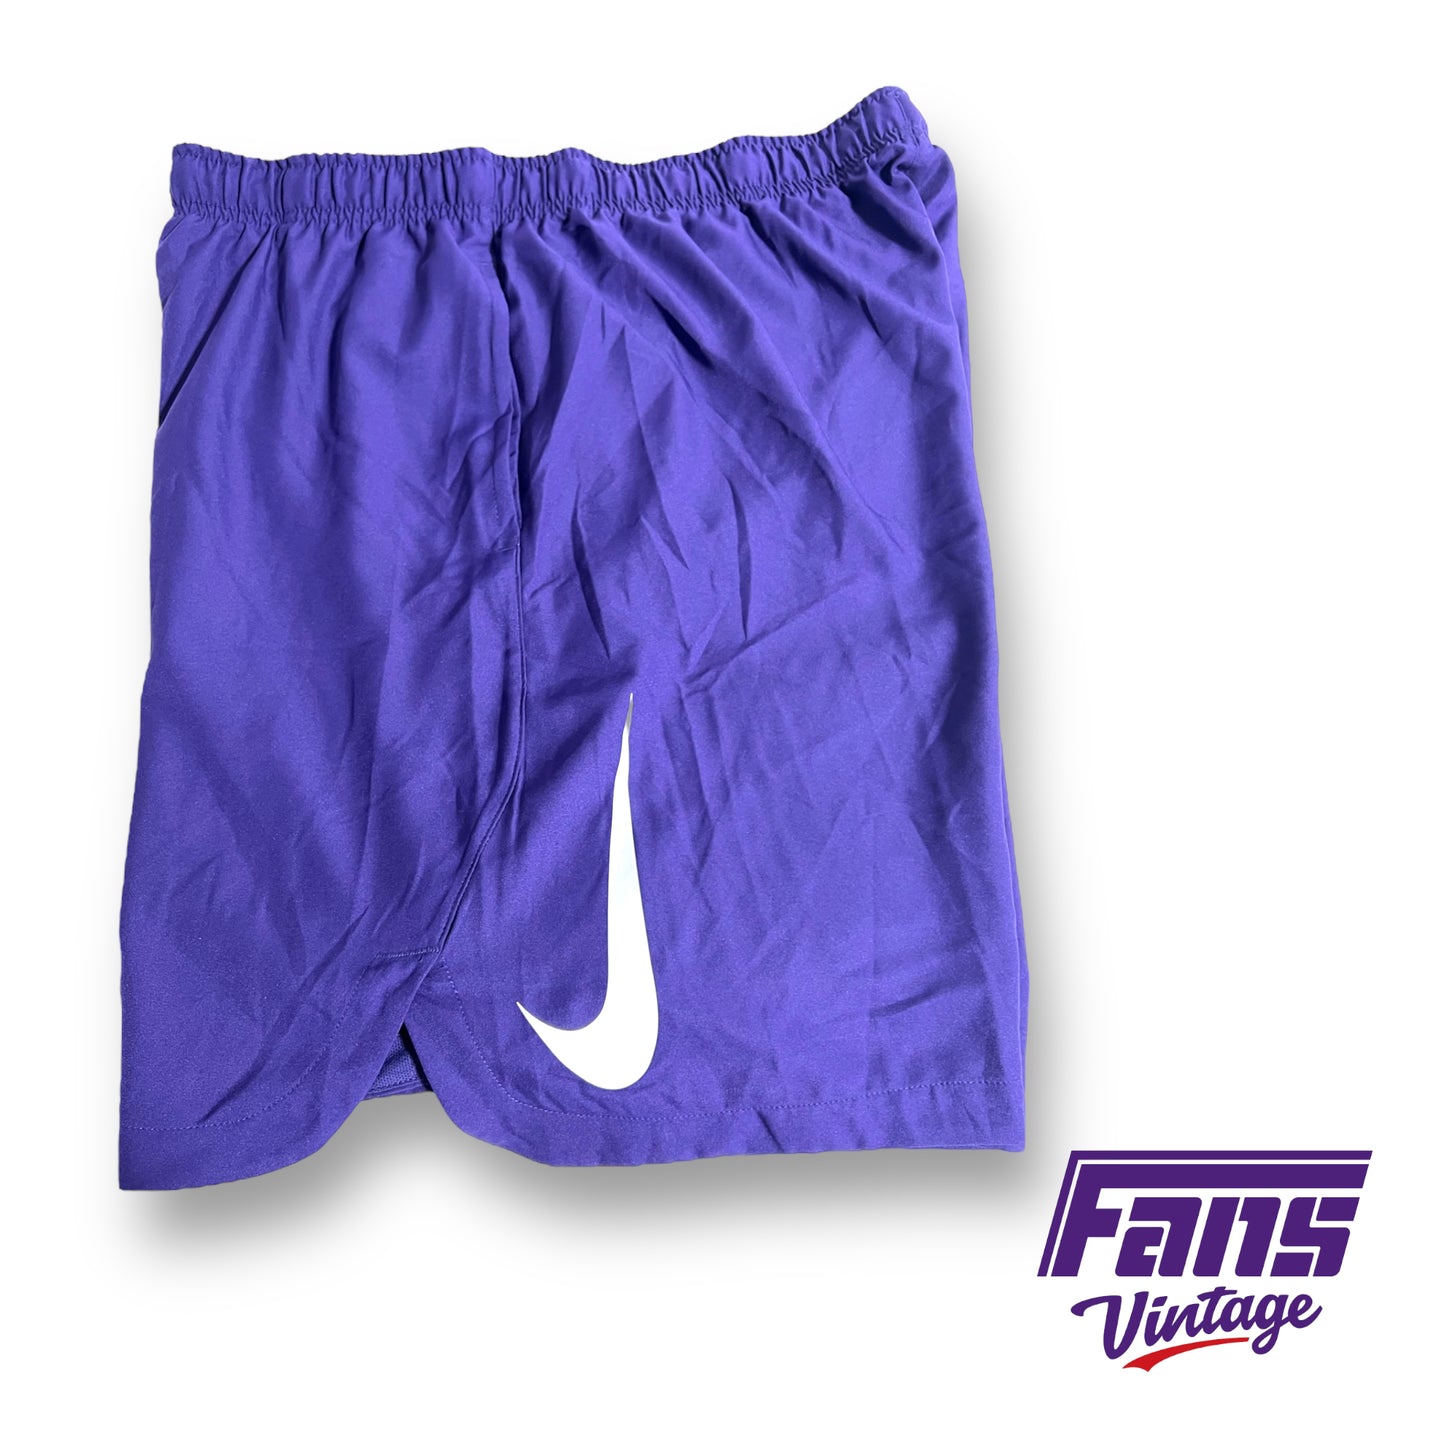 Nike TCU 'Horned Frog' Premium Team Issue dri-fit shorts - Large Nike Swoosh